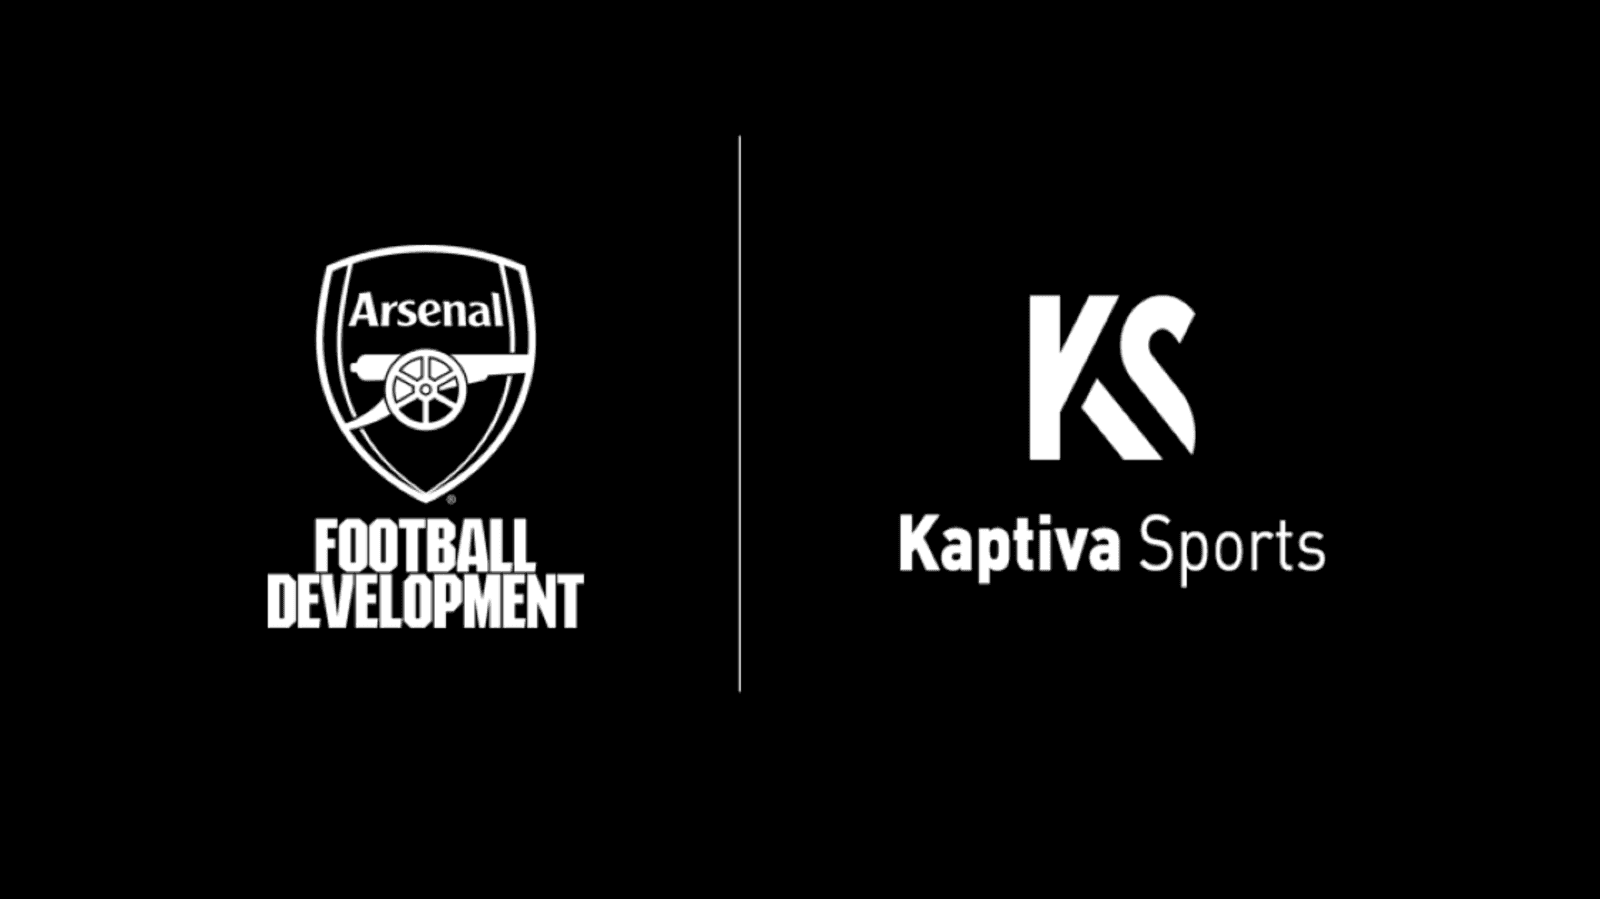 Wele Kaptiva Sports Arsenal Football Development News